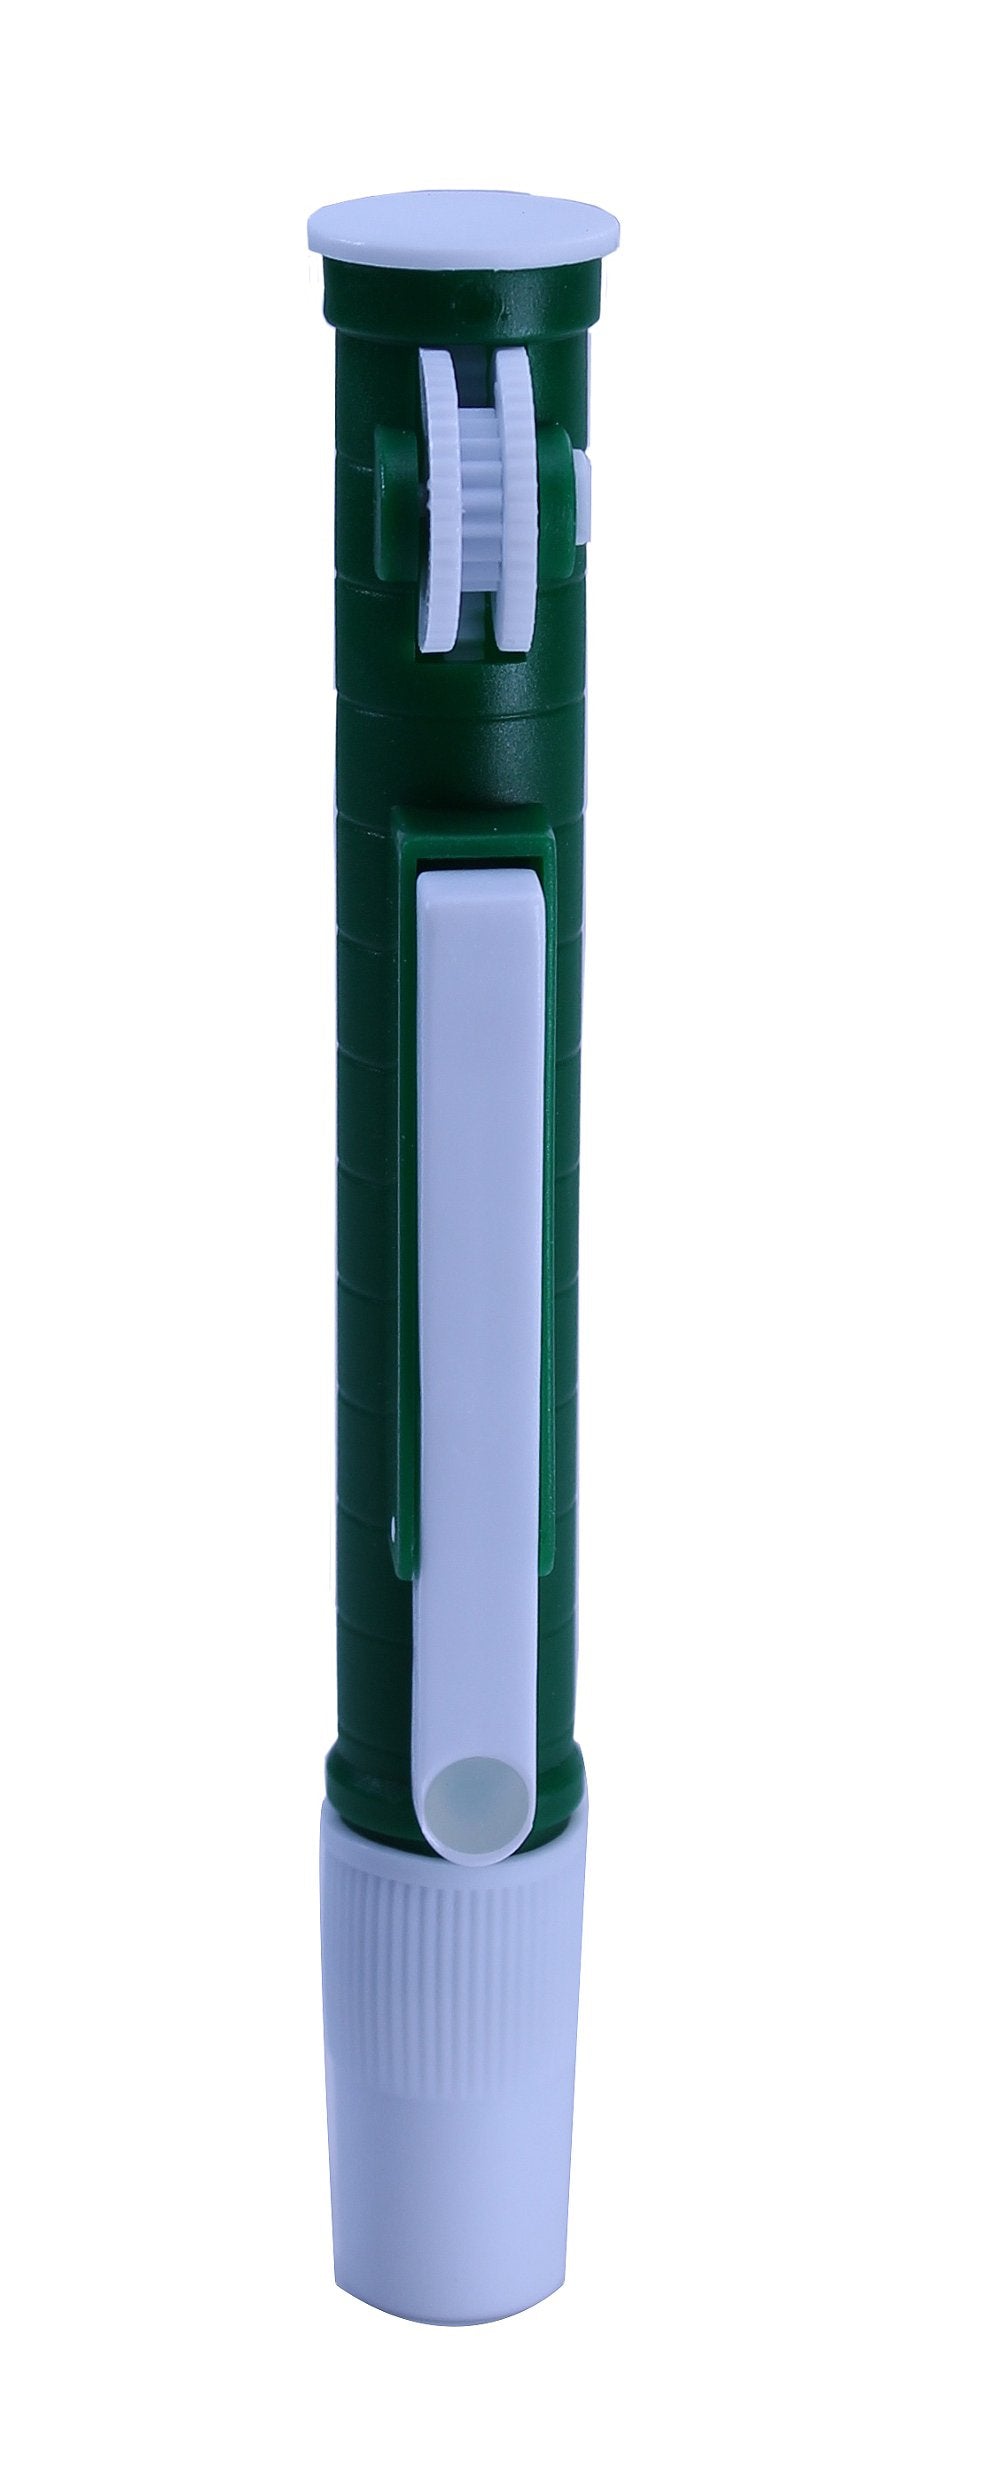 Volume Capacity (mL) 10 | Color Green | Draw LiquidThumb Wheel | Dispense Liquid Thumb Wheel or Quick Release | Sold As Each